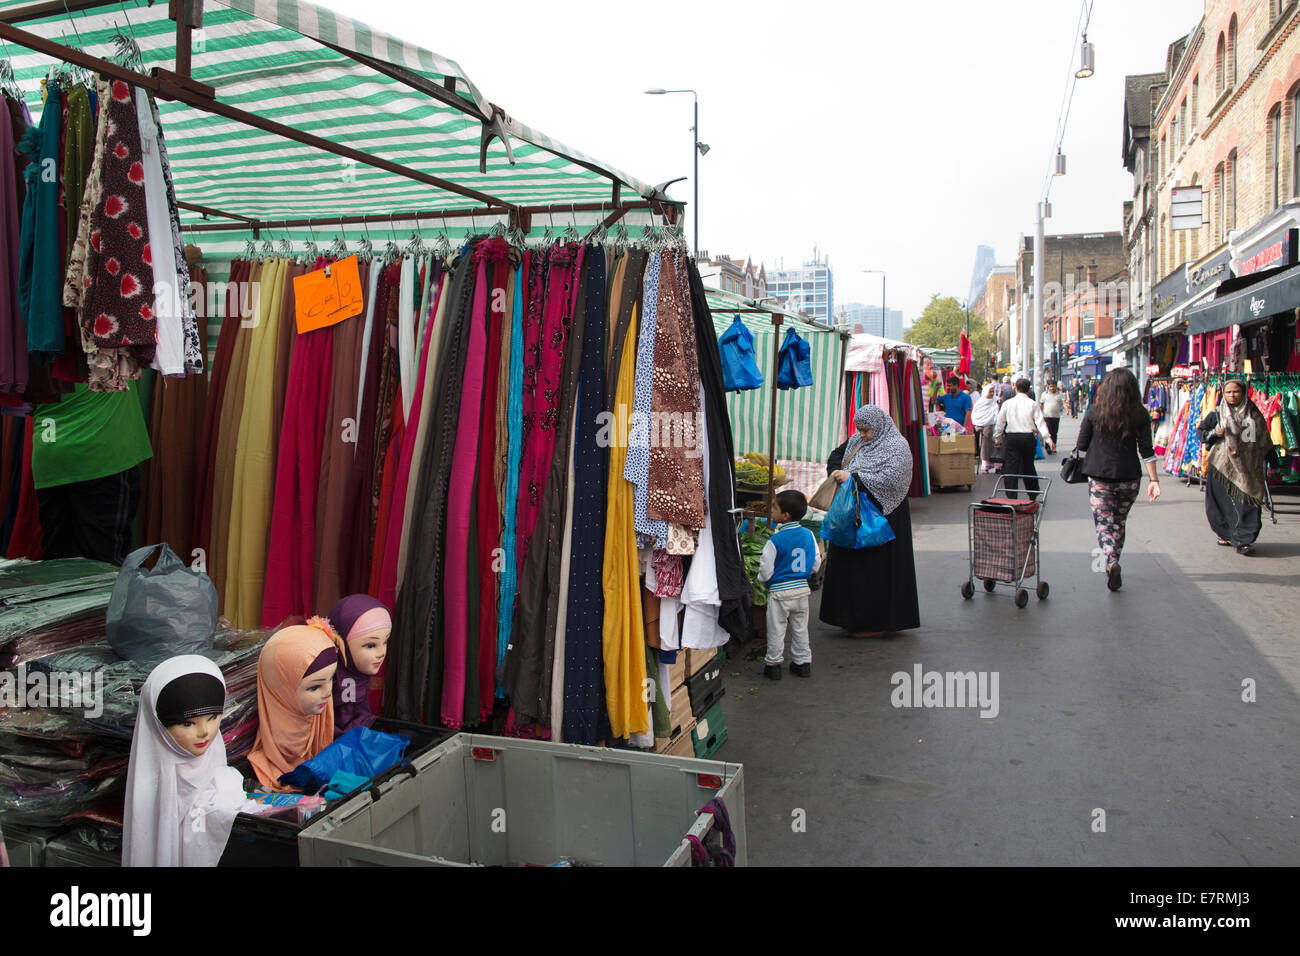 Islamic community, Whitechapel Road, East London, Tower Hamlets, London, England UK Stock Photo